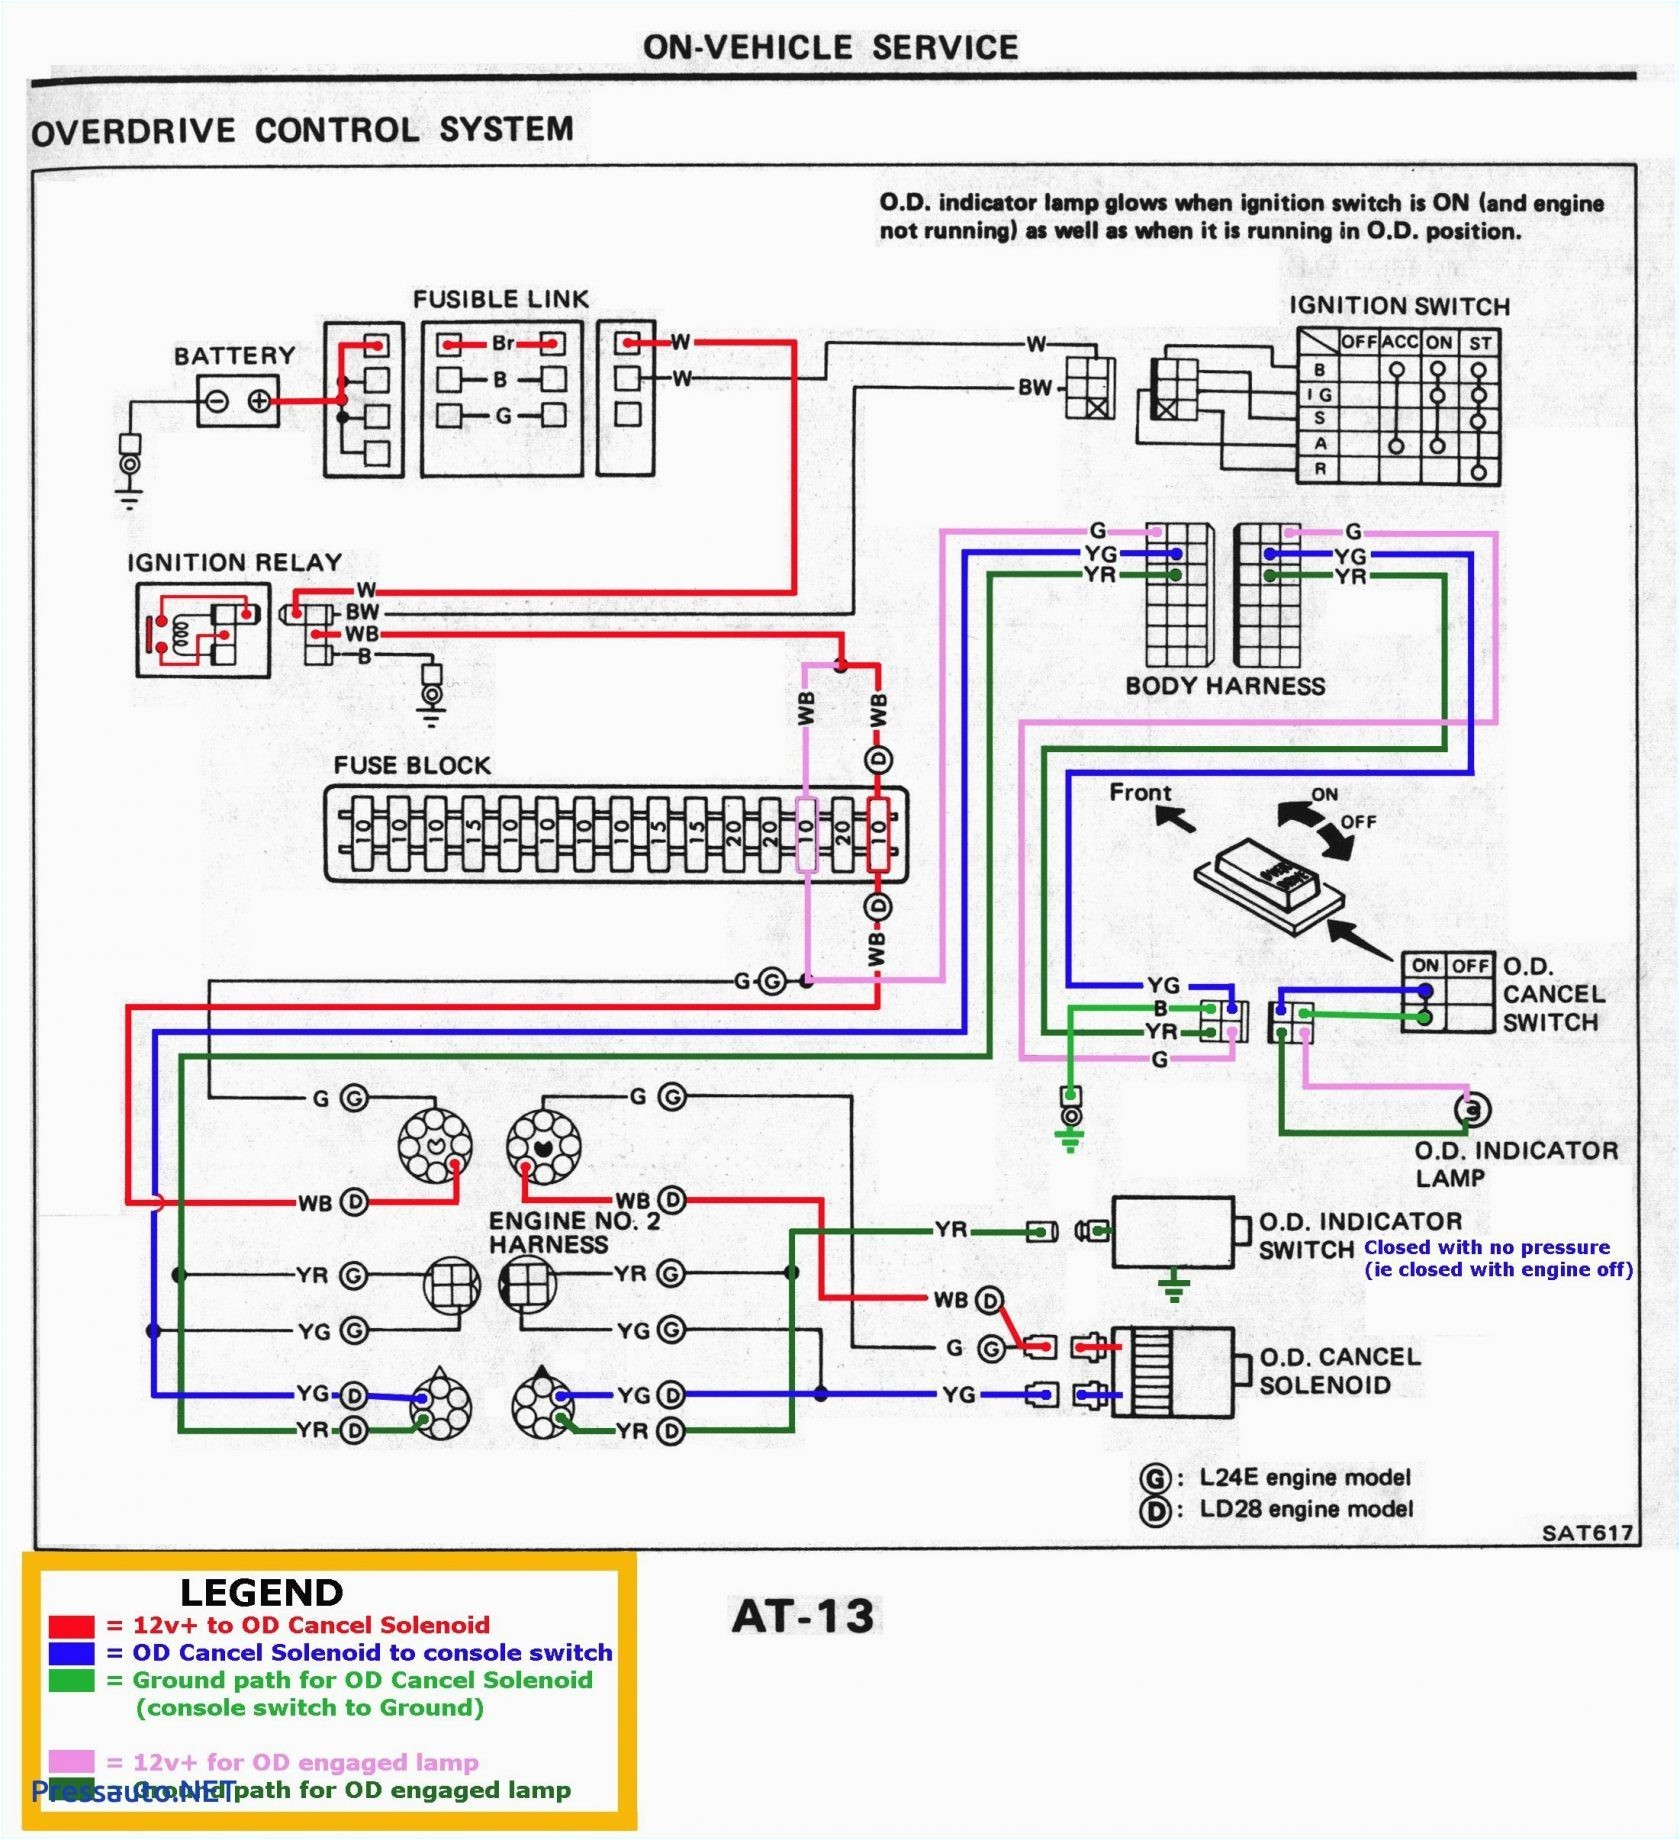 index 96 automotive circuit circuit diagram seekiccom wiring index 115 control circuit circuit diagram seekiccom